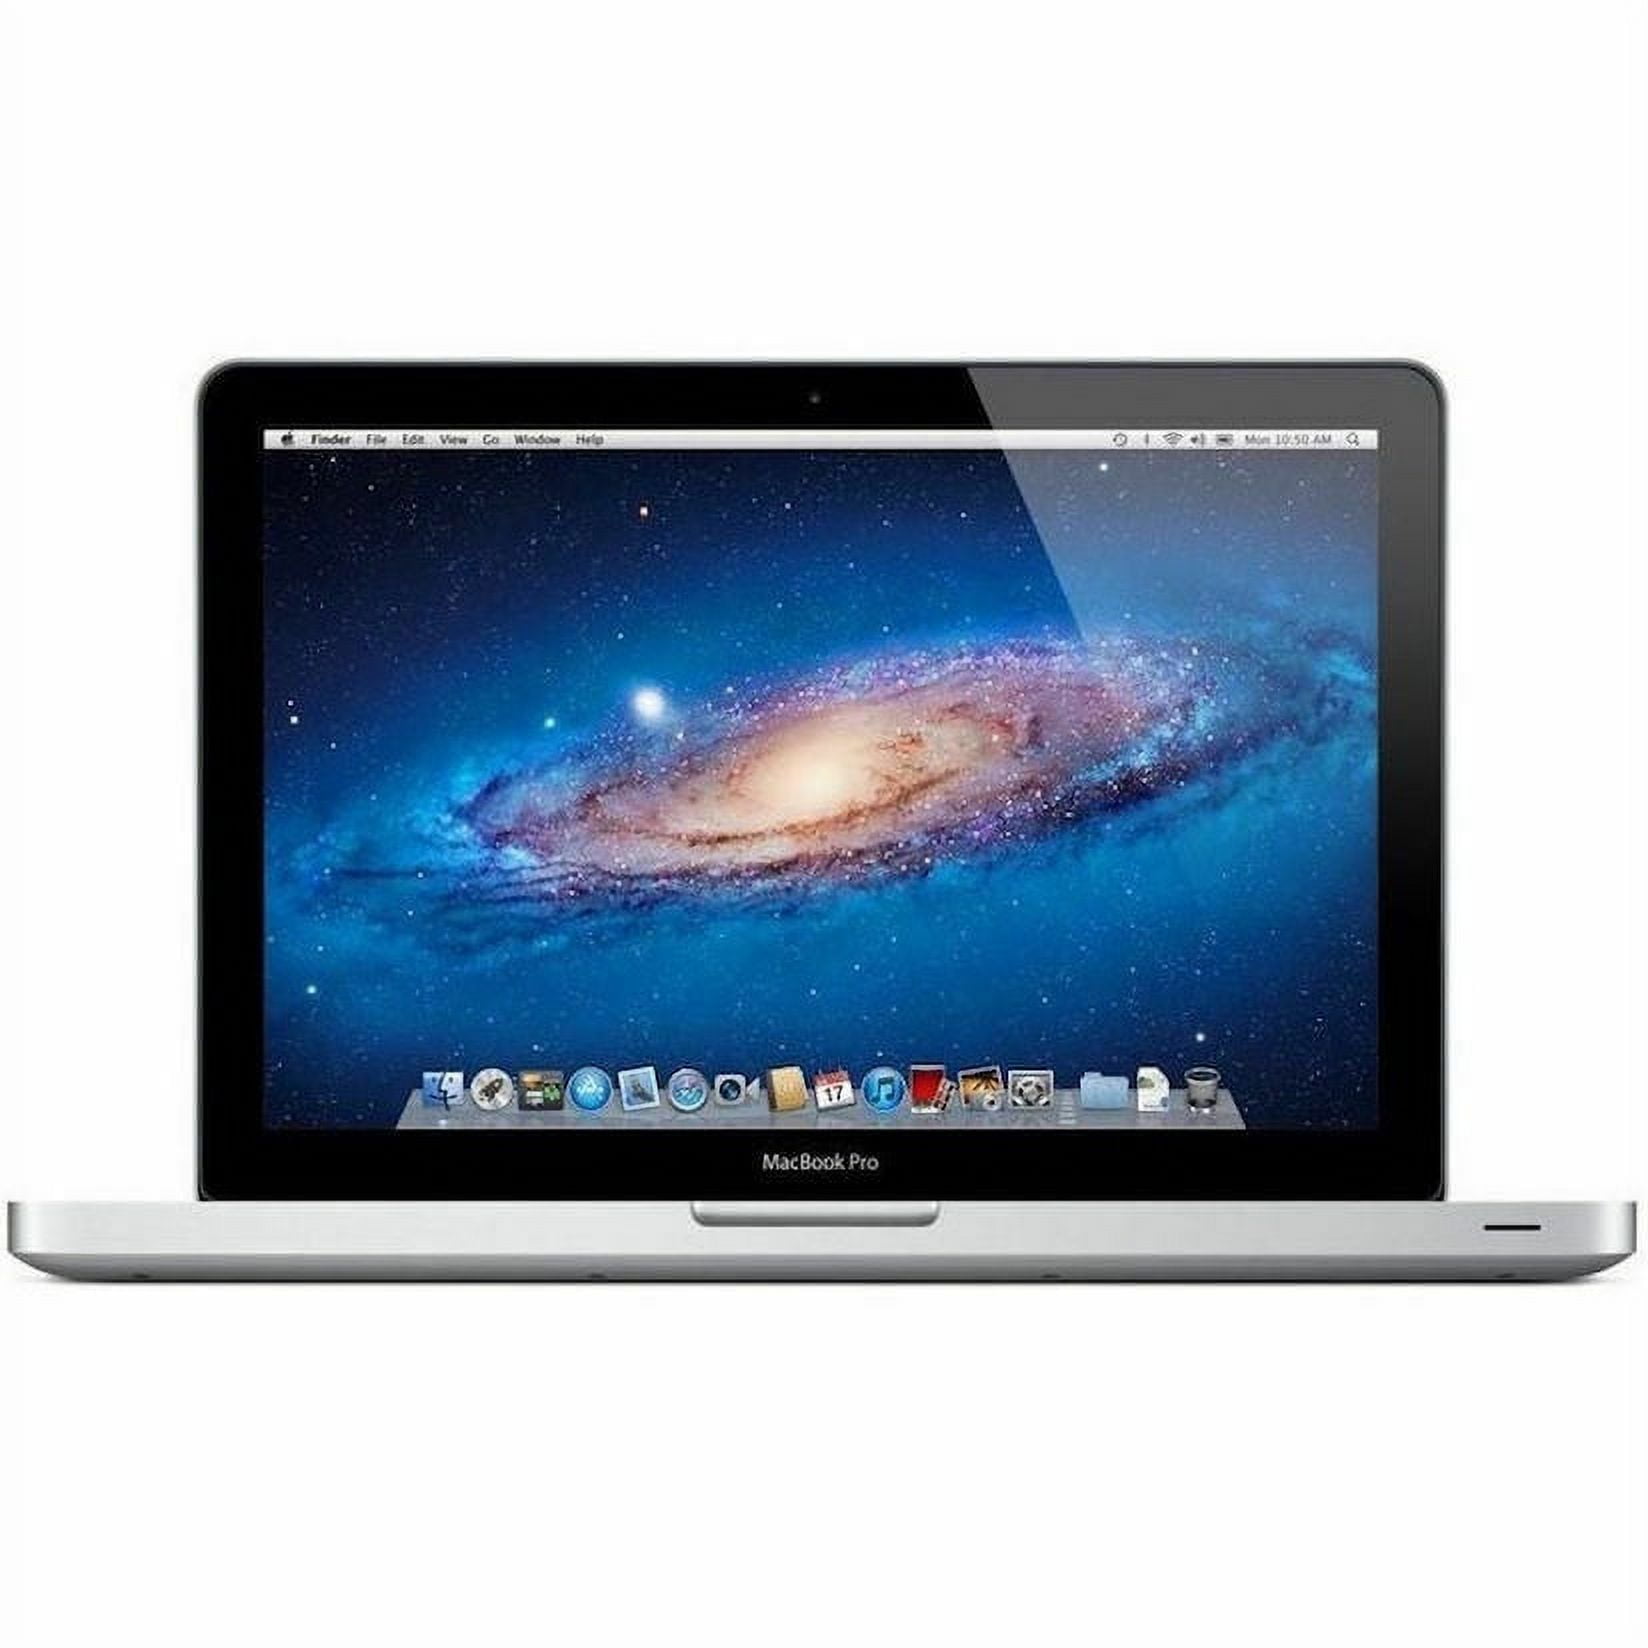 Restored Apple MacBook Pro Laptop Core i7 2.9GHz 8GB RAM 750GB HD